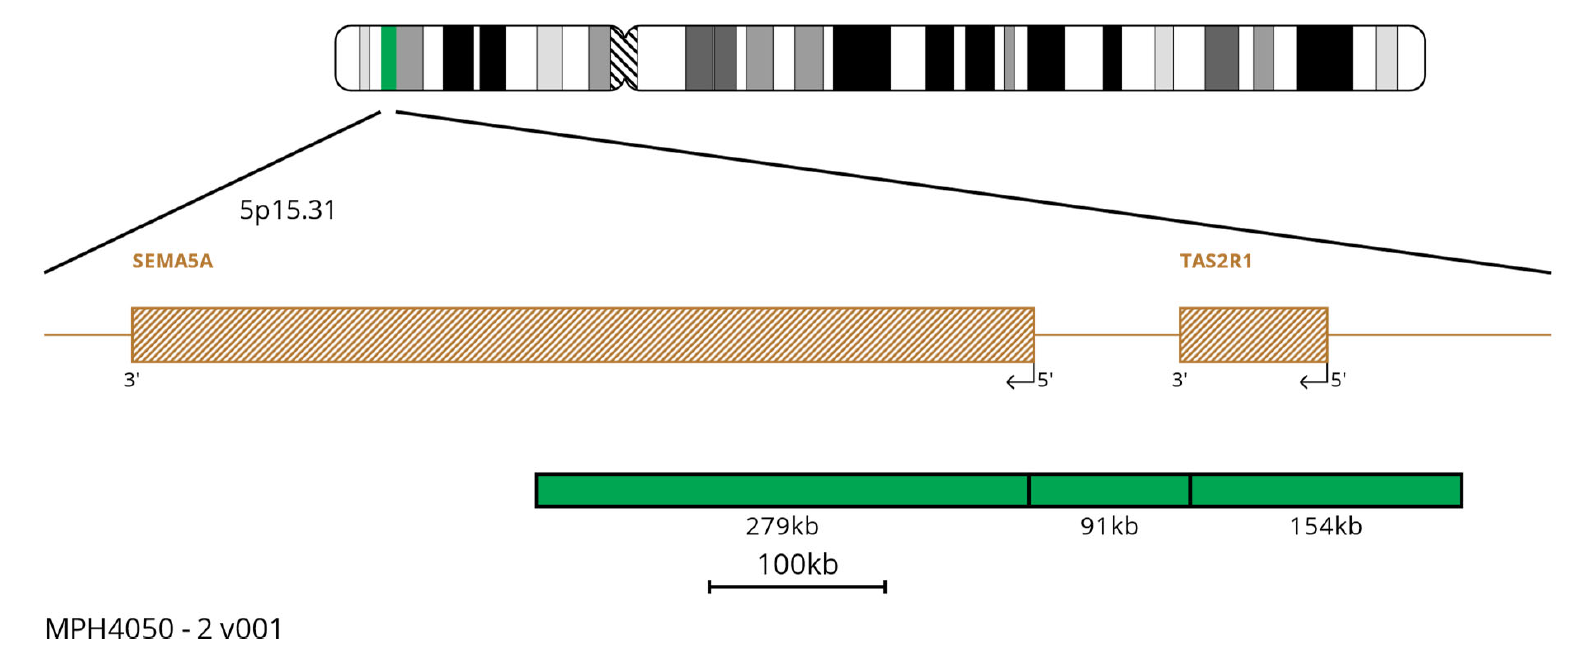 MPH4050 5P15.31 FISH Probe Chromosome Map